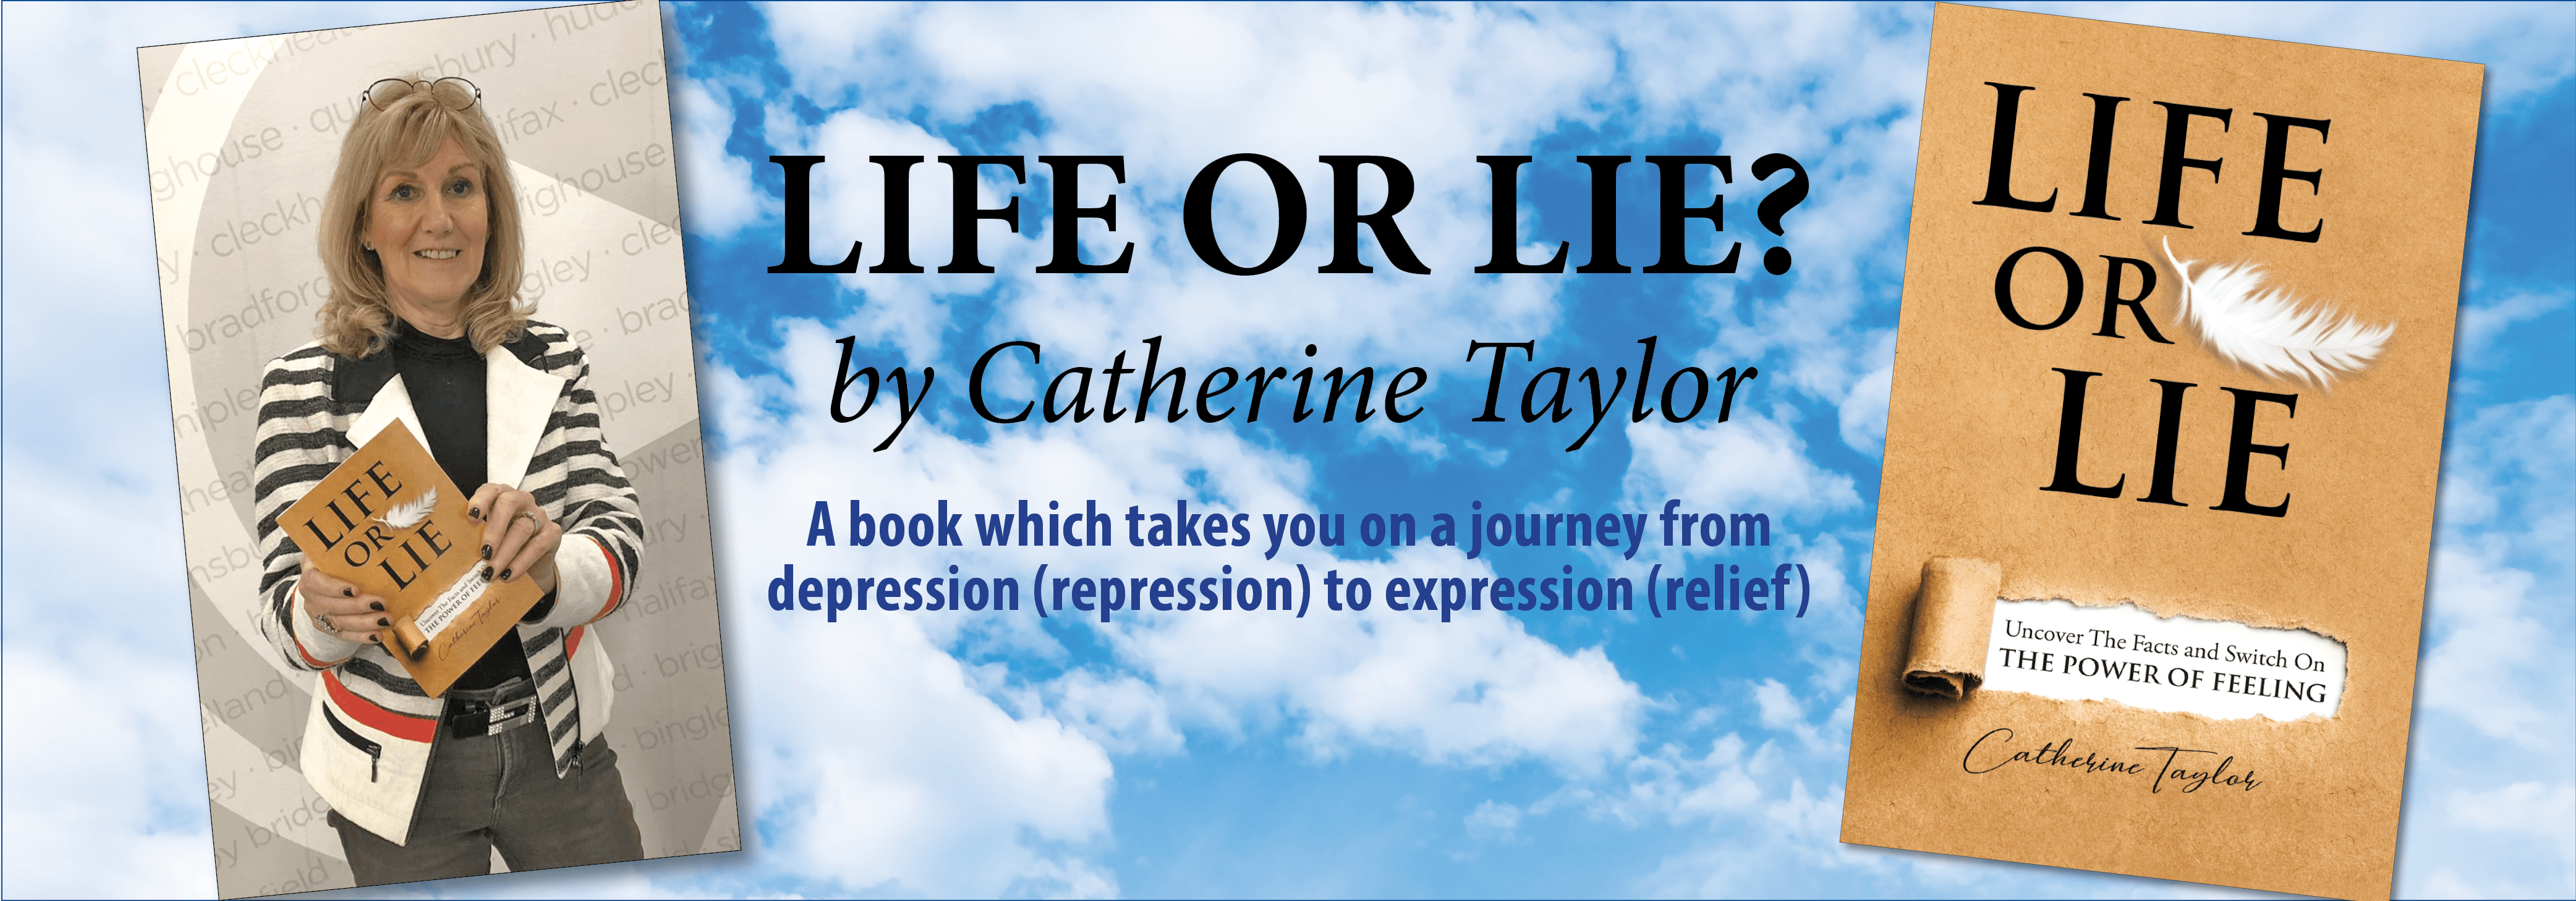 Catherine Taylor